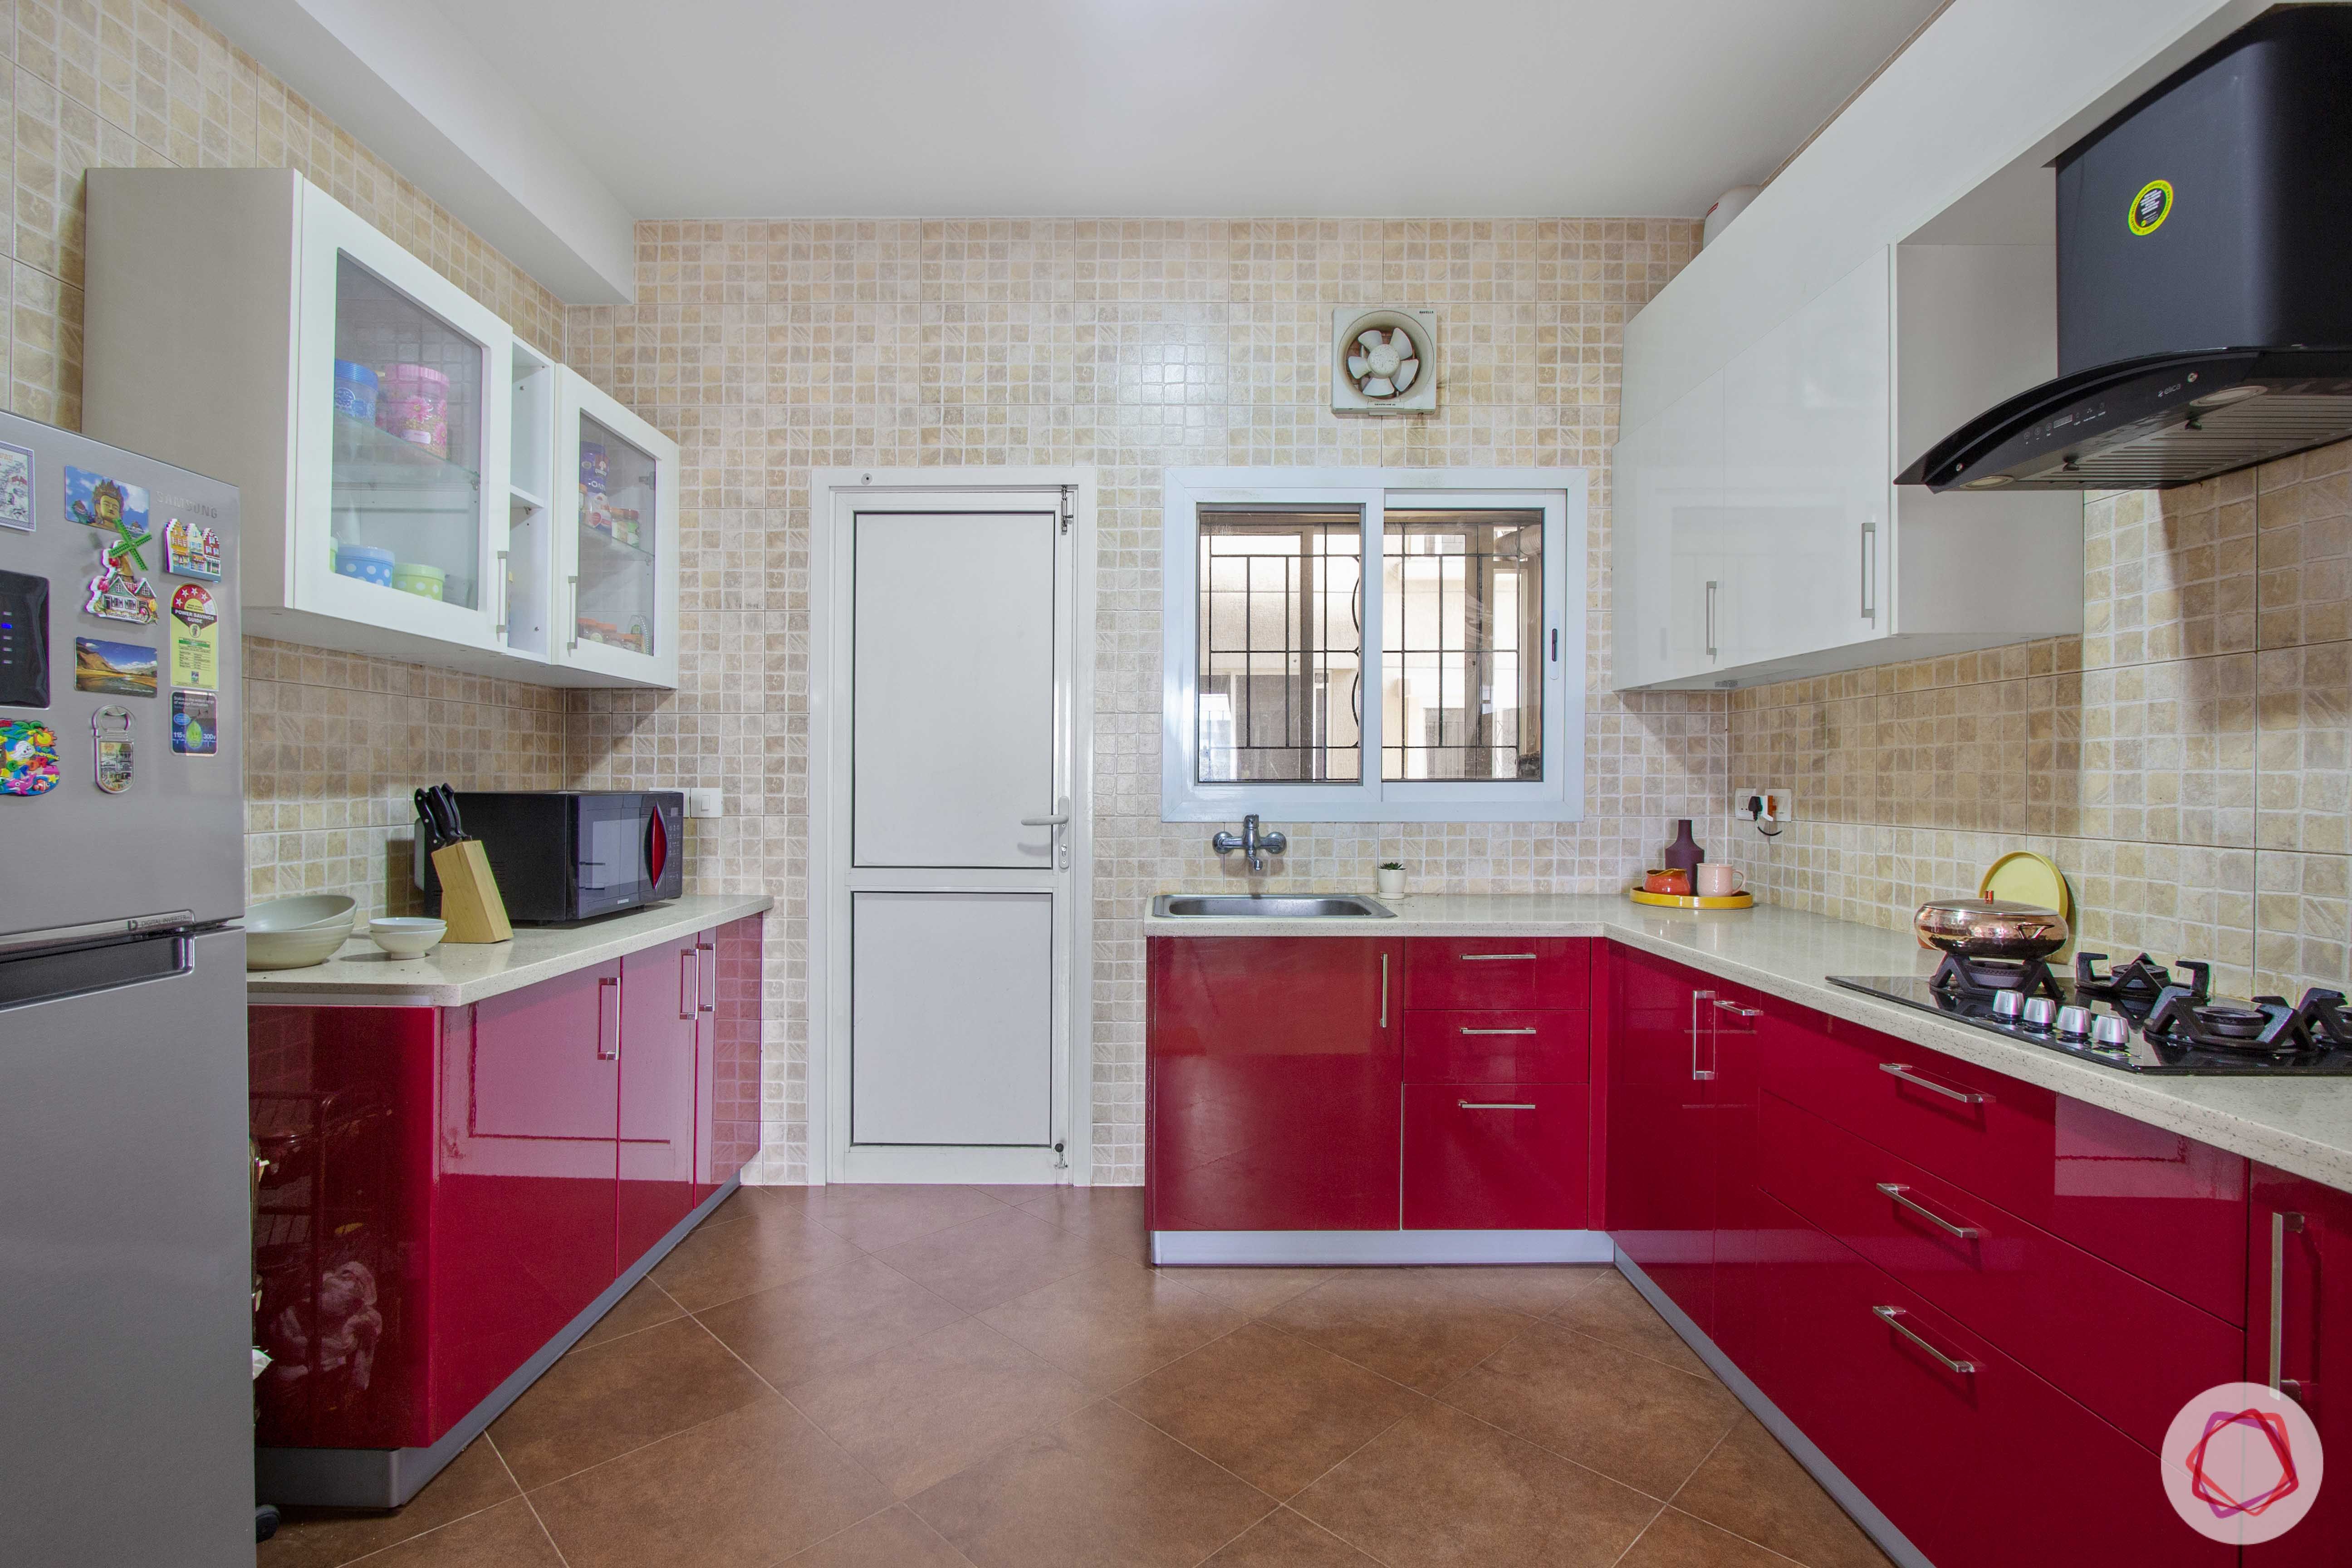 livspace-bangalore-kitchen-storage-cabinets-red-white